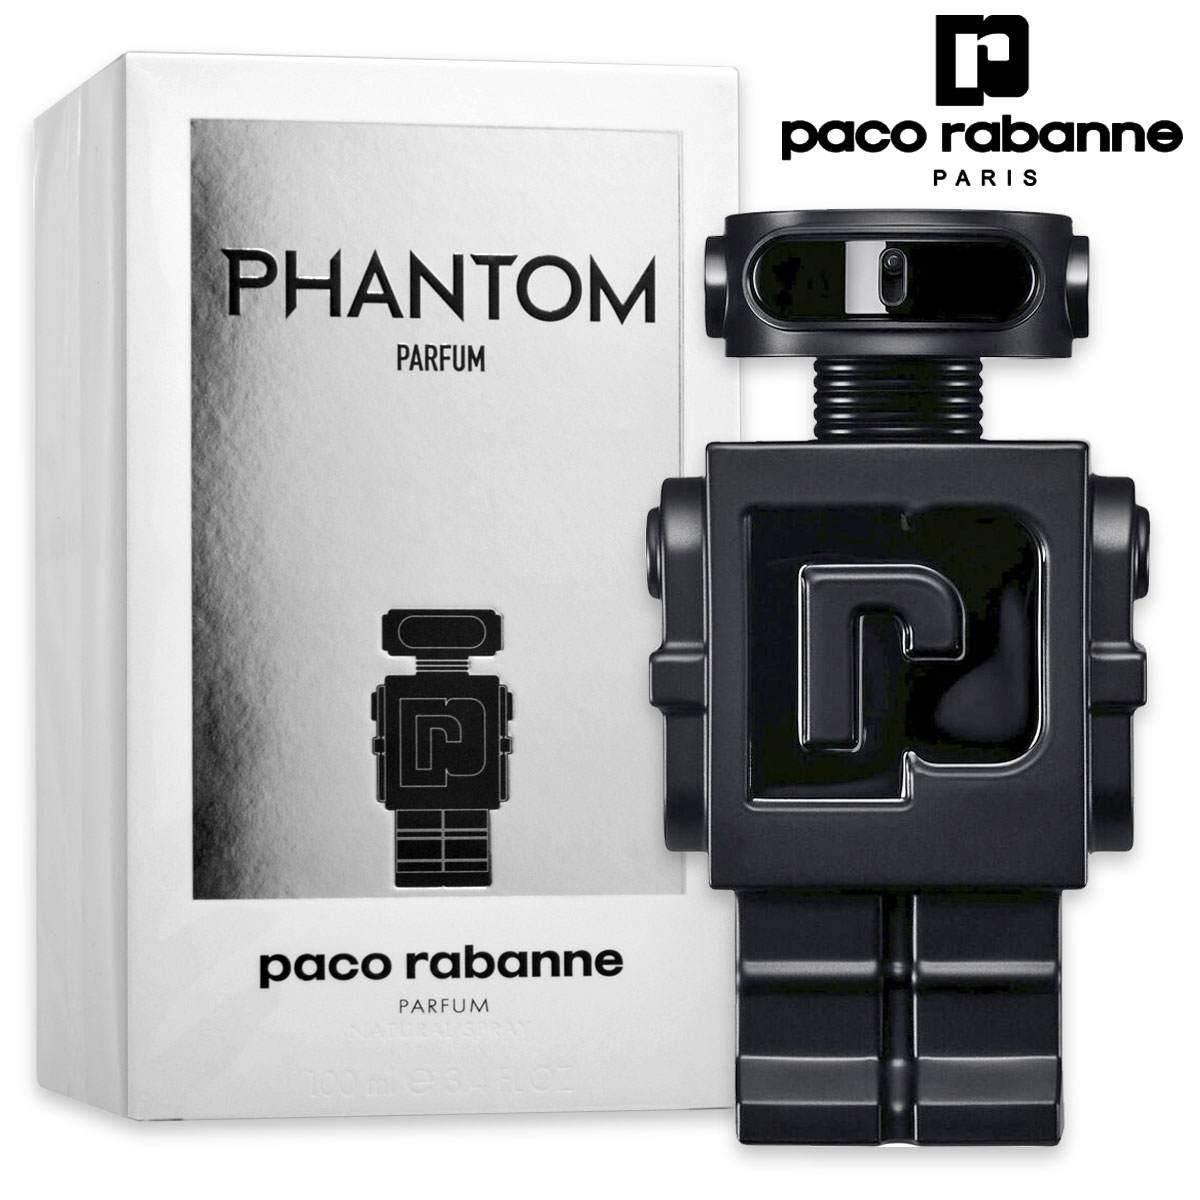 Paco rabanne Paco rabanne phantom parfum 100ml 65188737 3349668614592